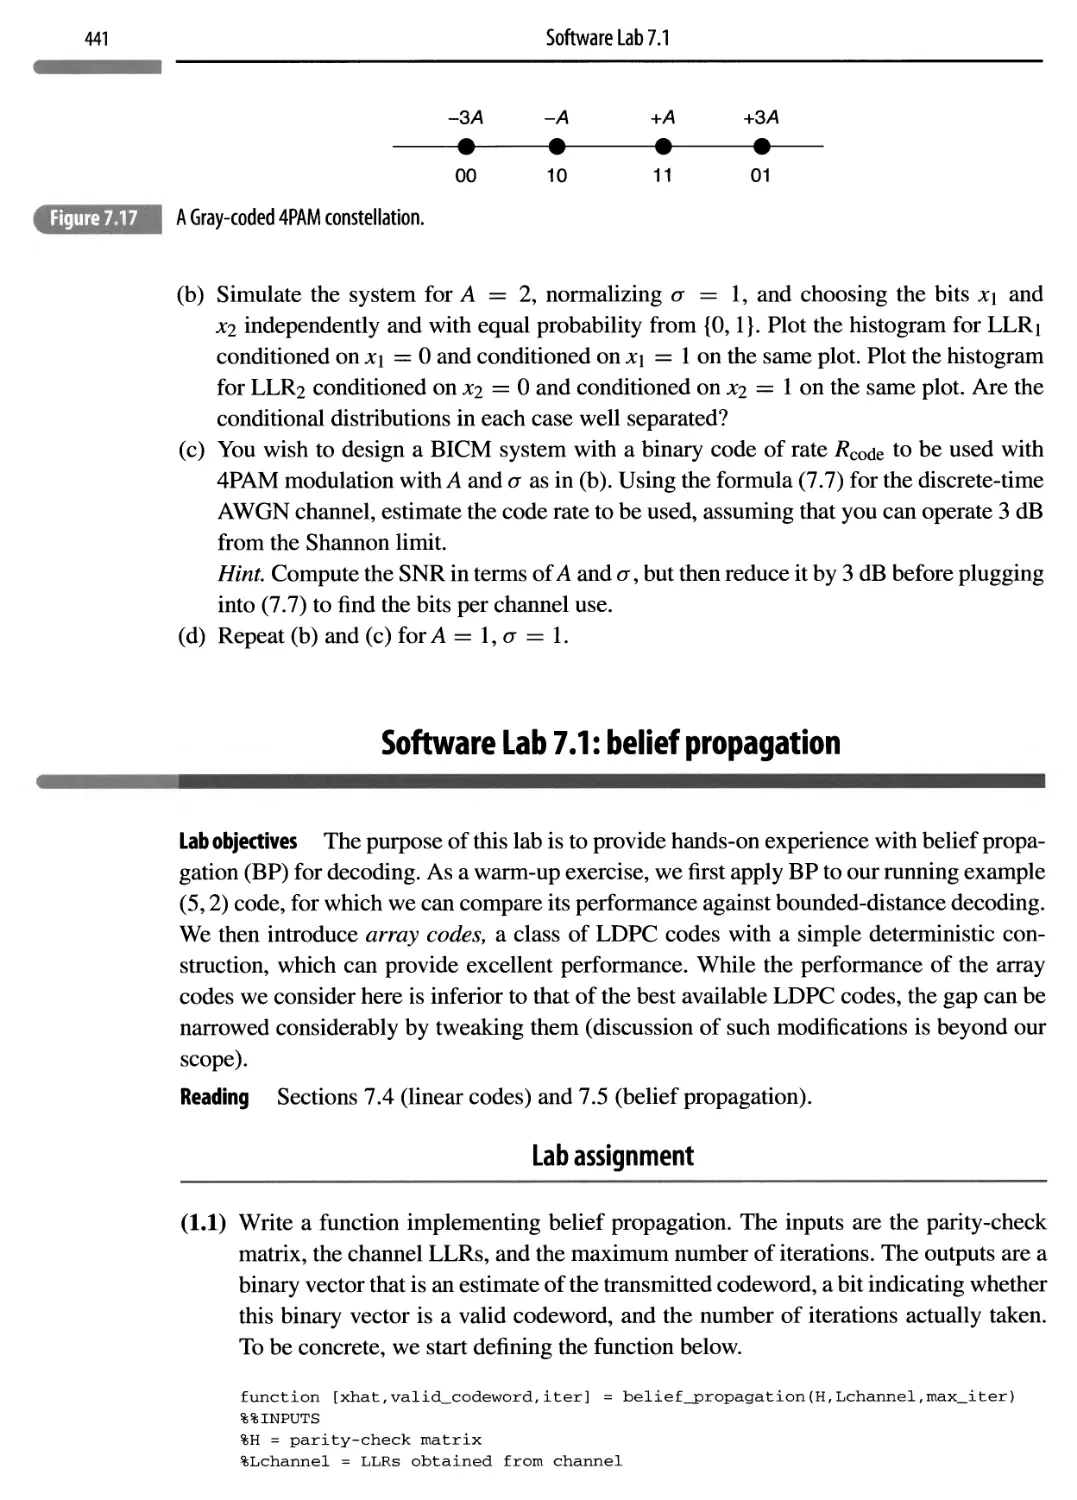 Software Lab 7.1: belief propagation 441